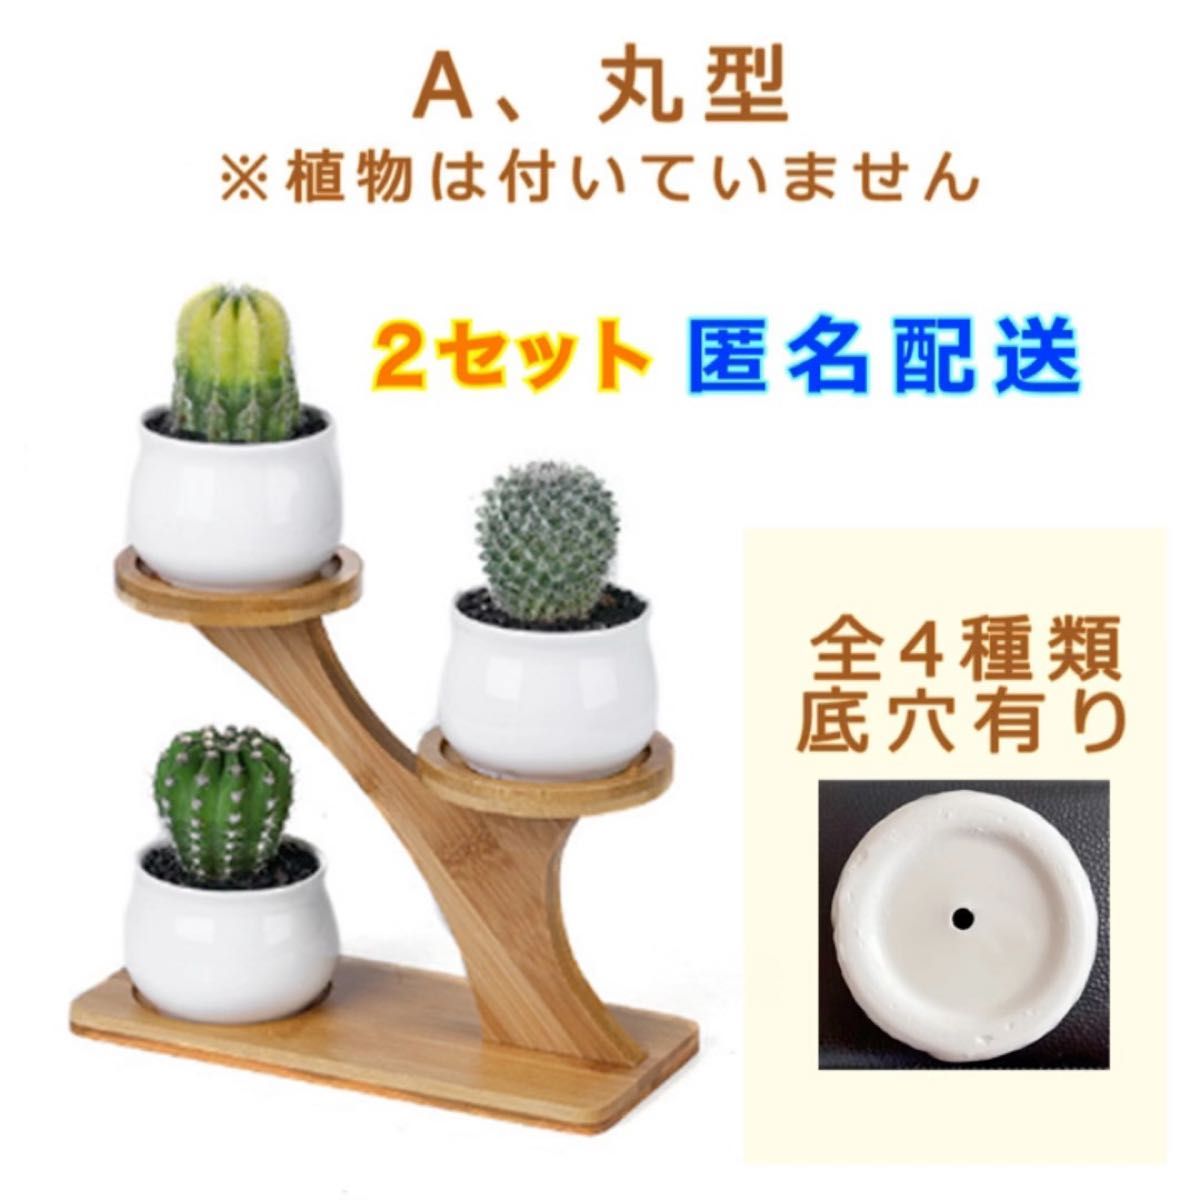 A-丸型 ２セット 陶器鉢新品 竹製スタンドホルダー付き 鉢+スタンドセット 植木鉢 丸型 底穴有り 陶器